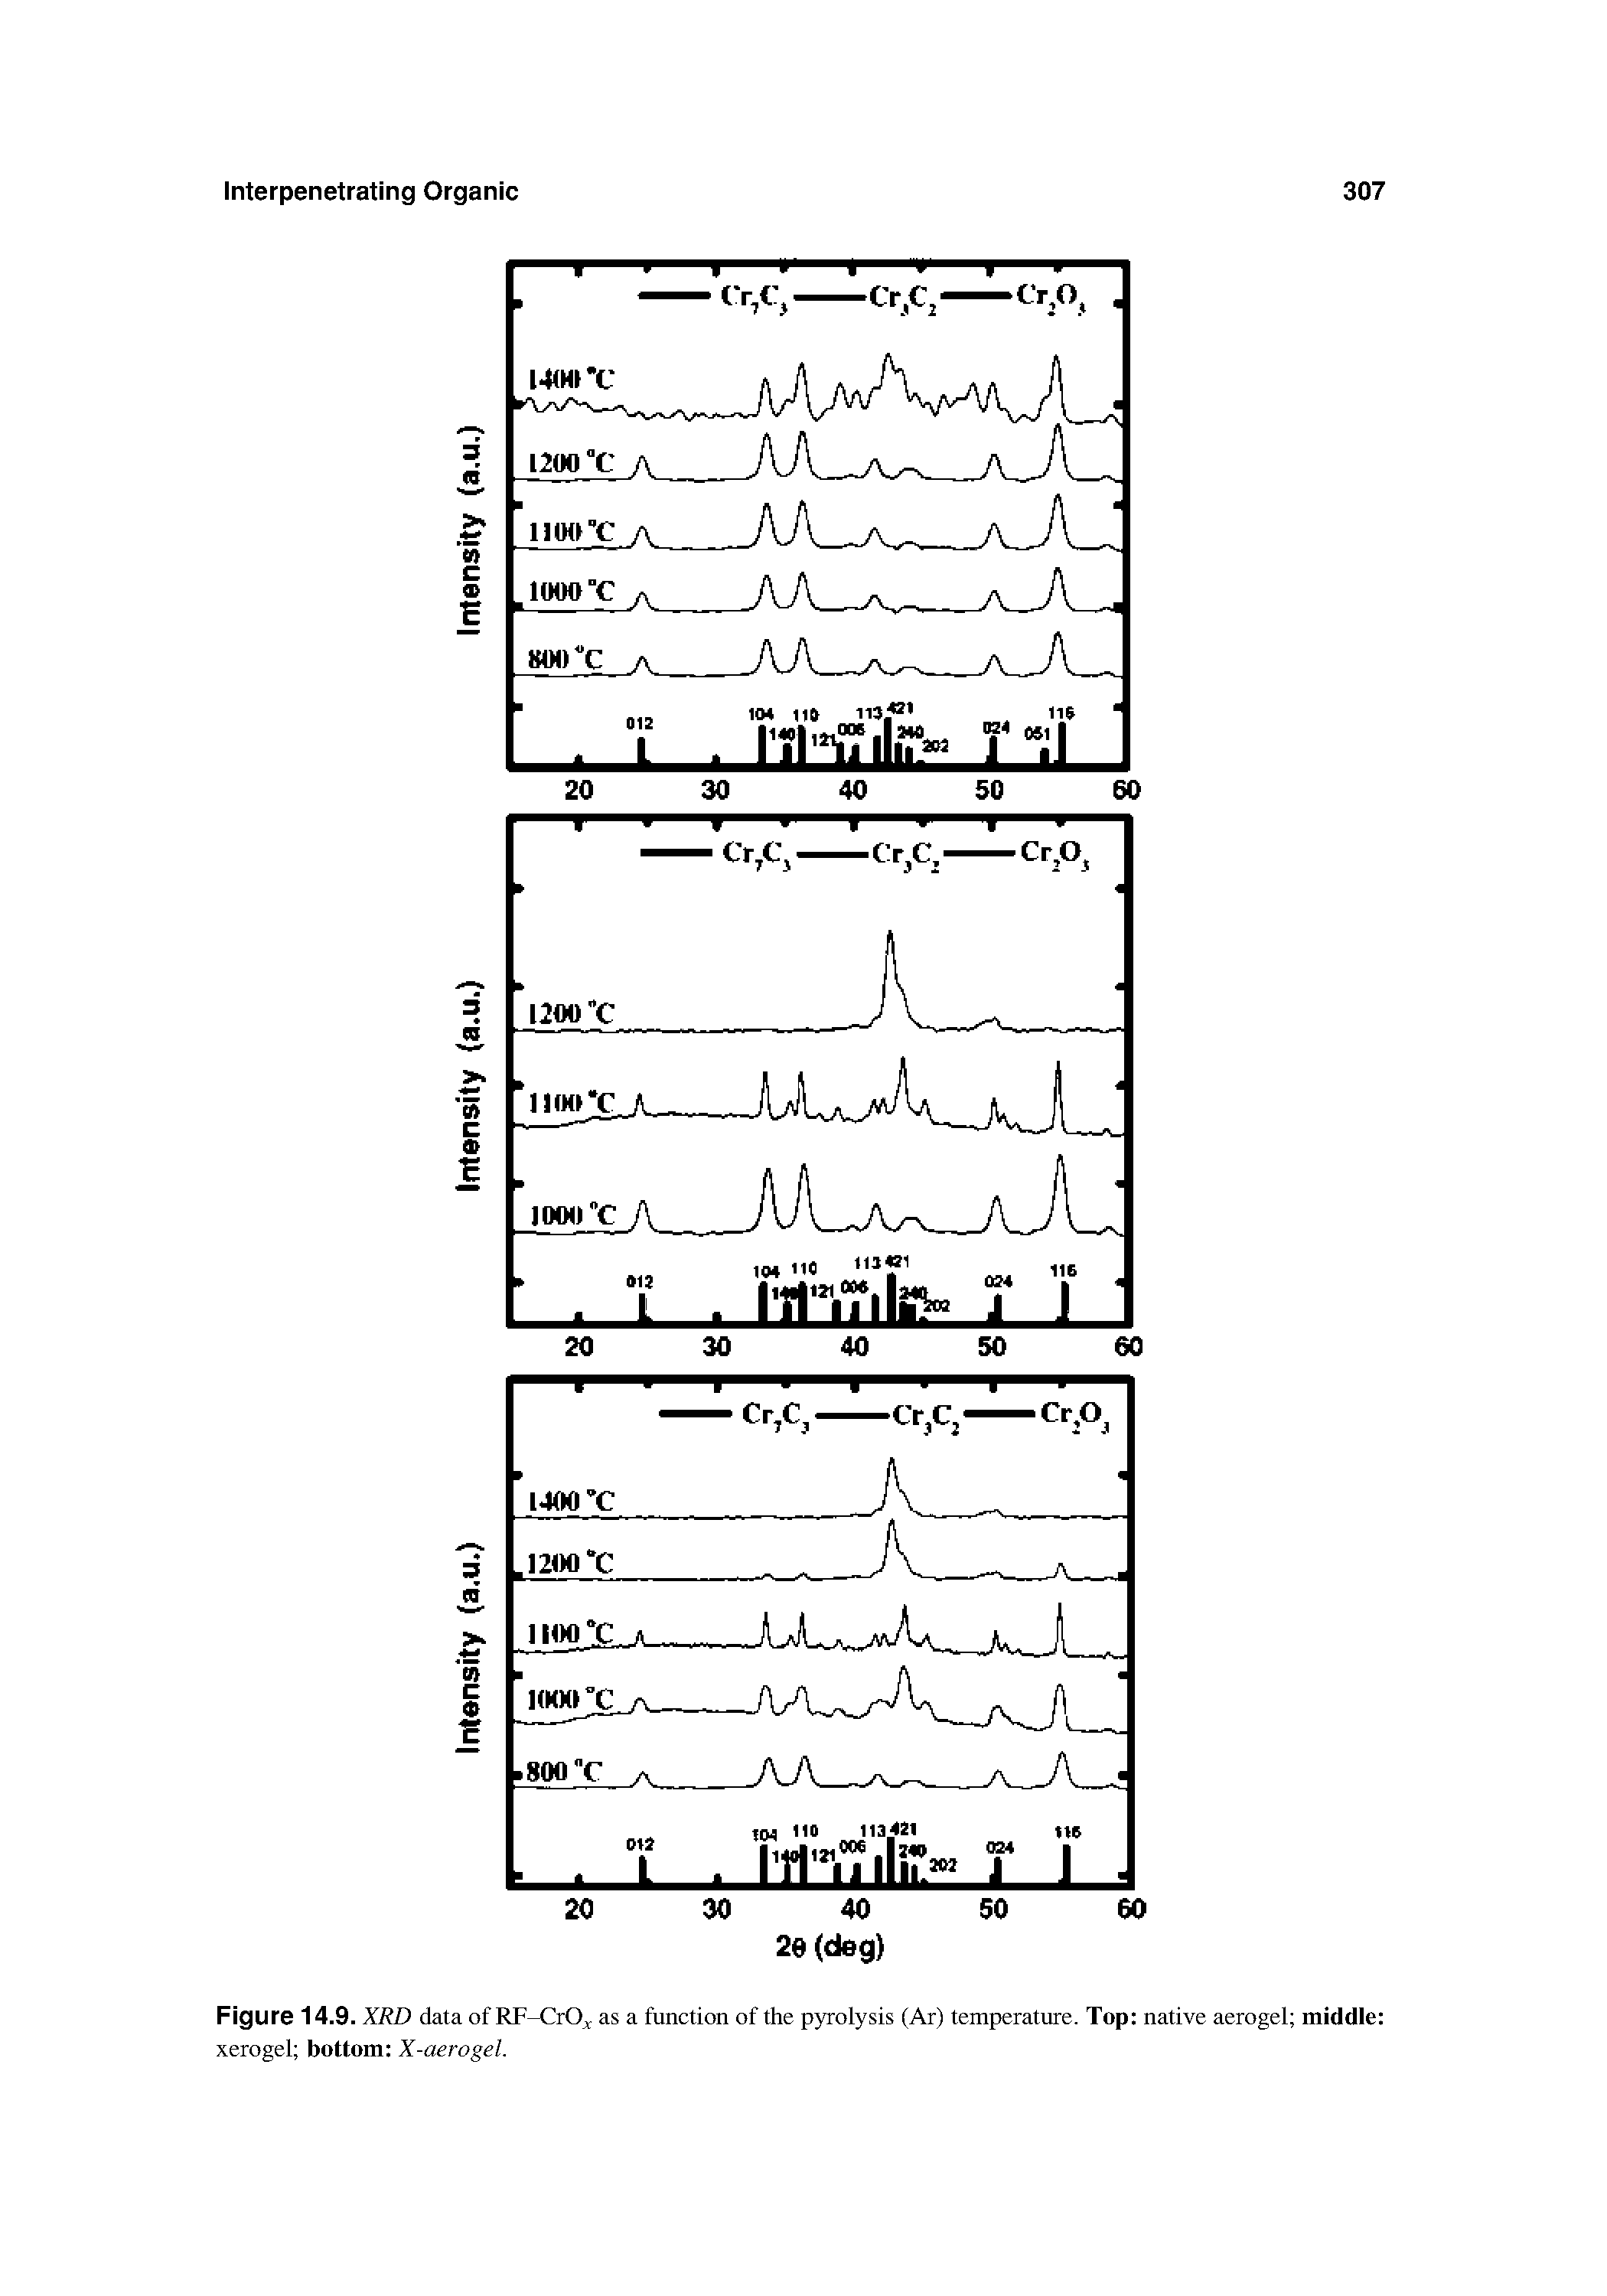 Figure 14.9. XRD data of RF-CrO - as a function of the pyrolysis (Ar) temperature. Top native aerogel middle xerogel bottom X-aerogel.